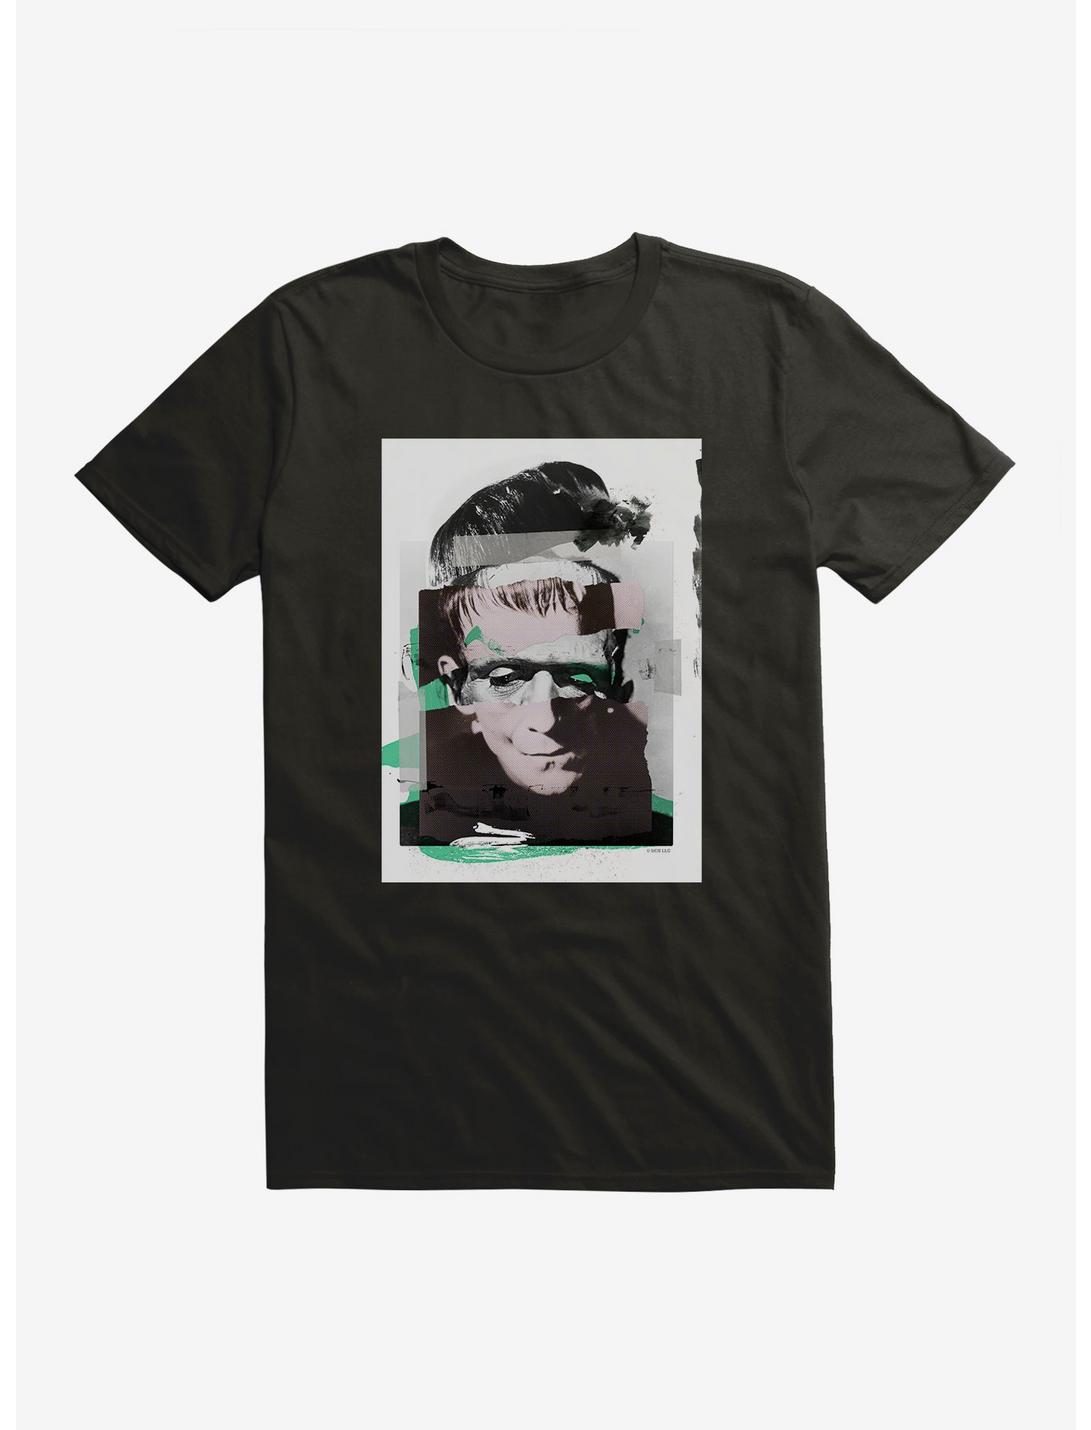 Universal Monsters Frankenstein Distorted Portrait T-Shirt, , hi-res